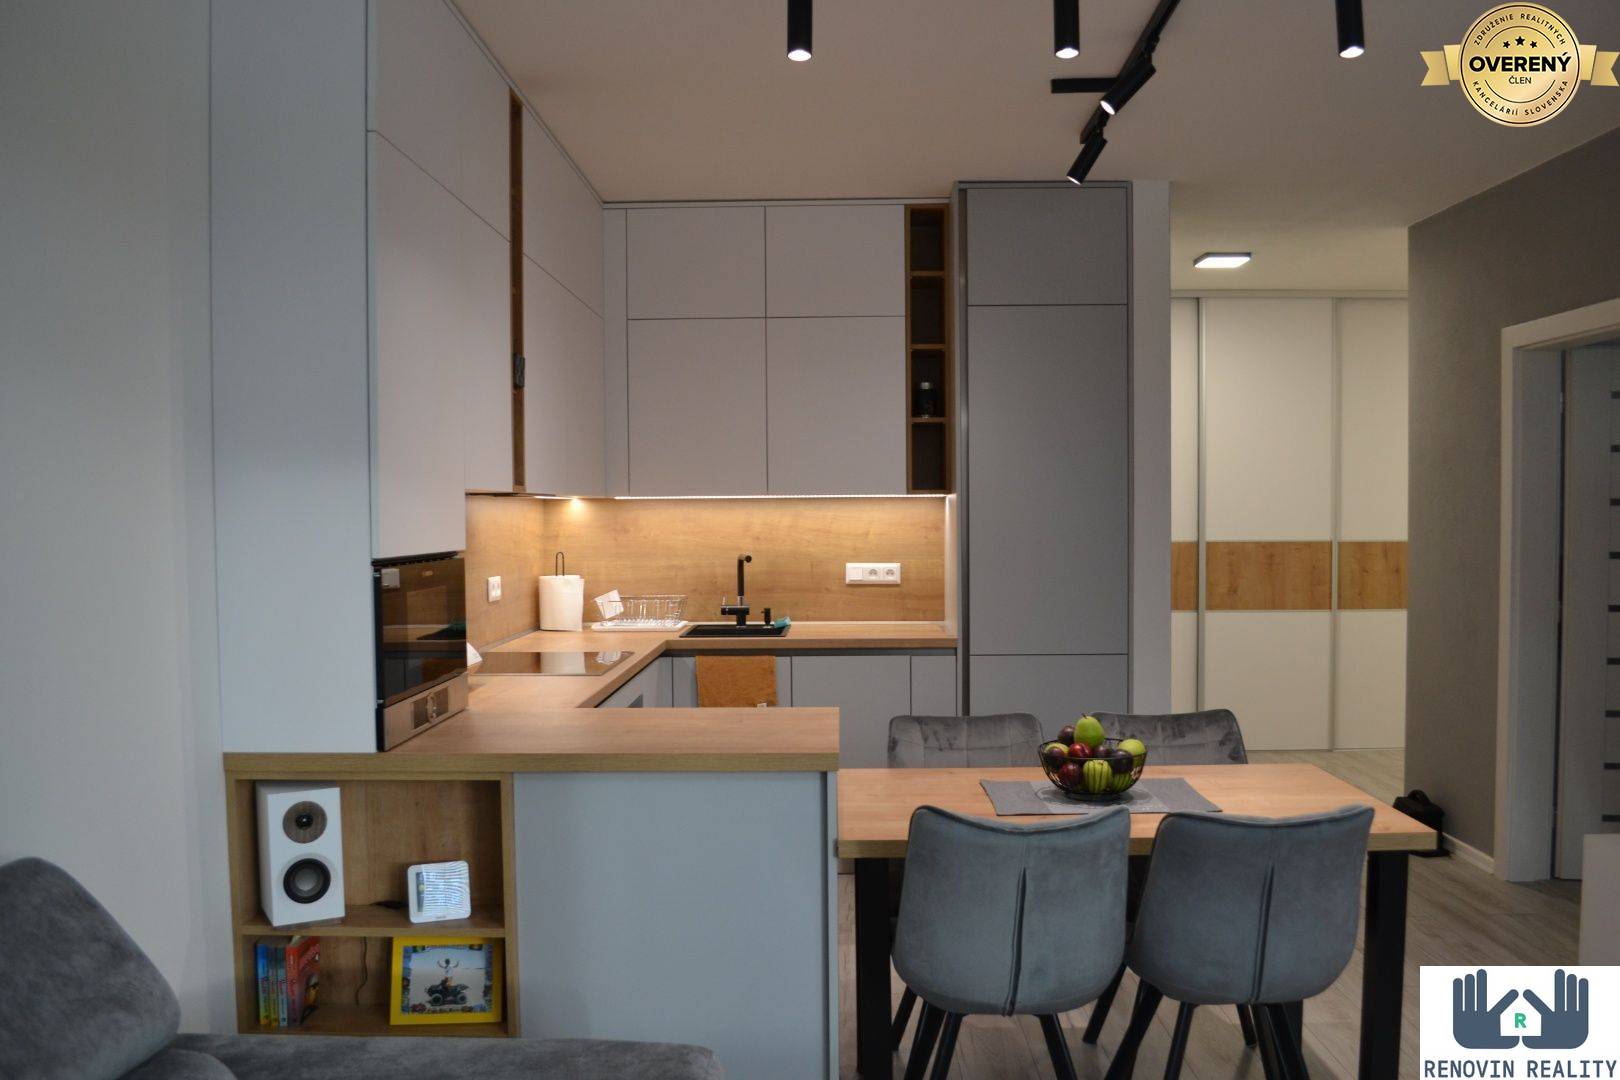 2-izbový byt s predzáhradkou v novostave Bytové domy Hájik vo Zvolene - kuchyňa